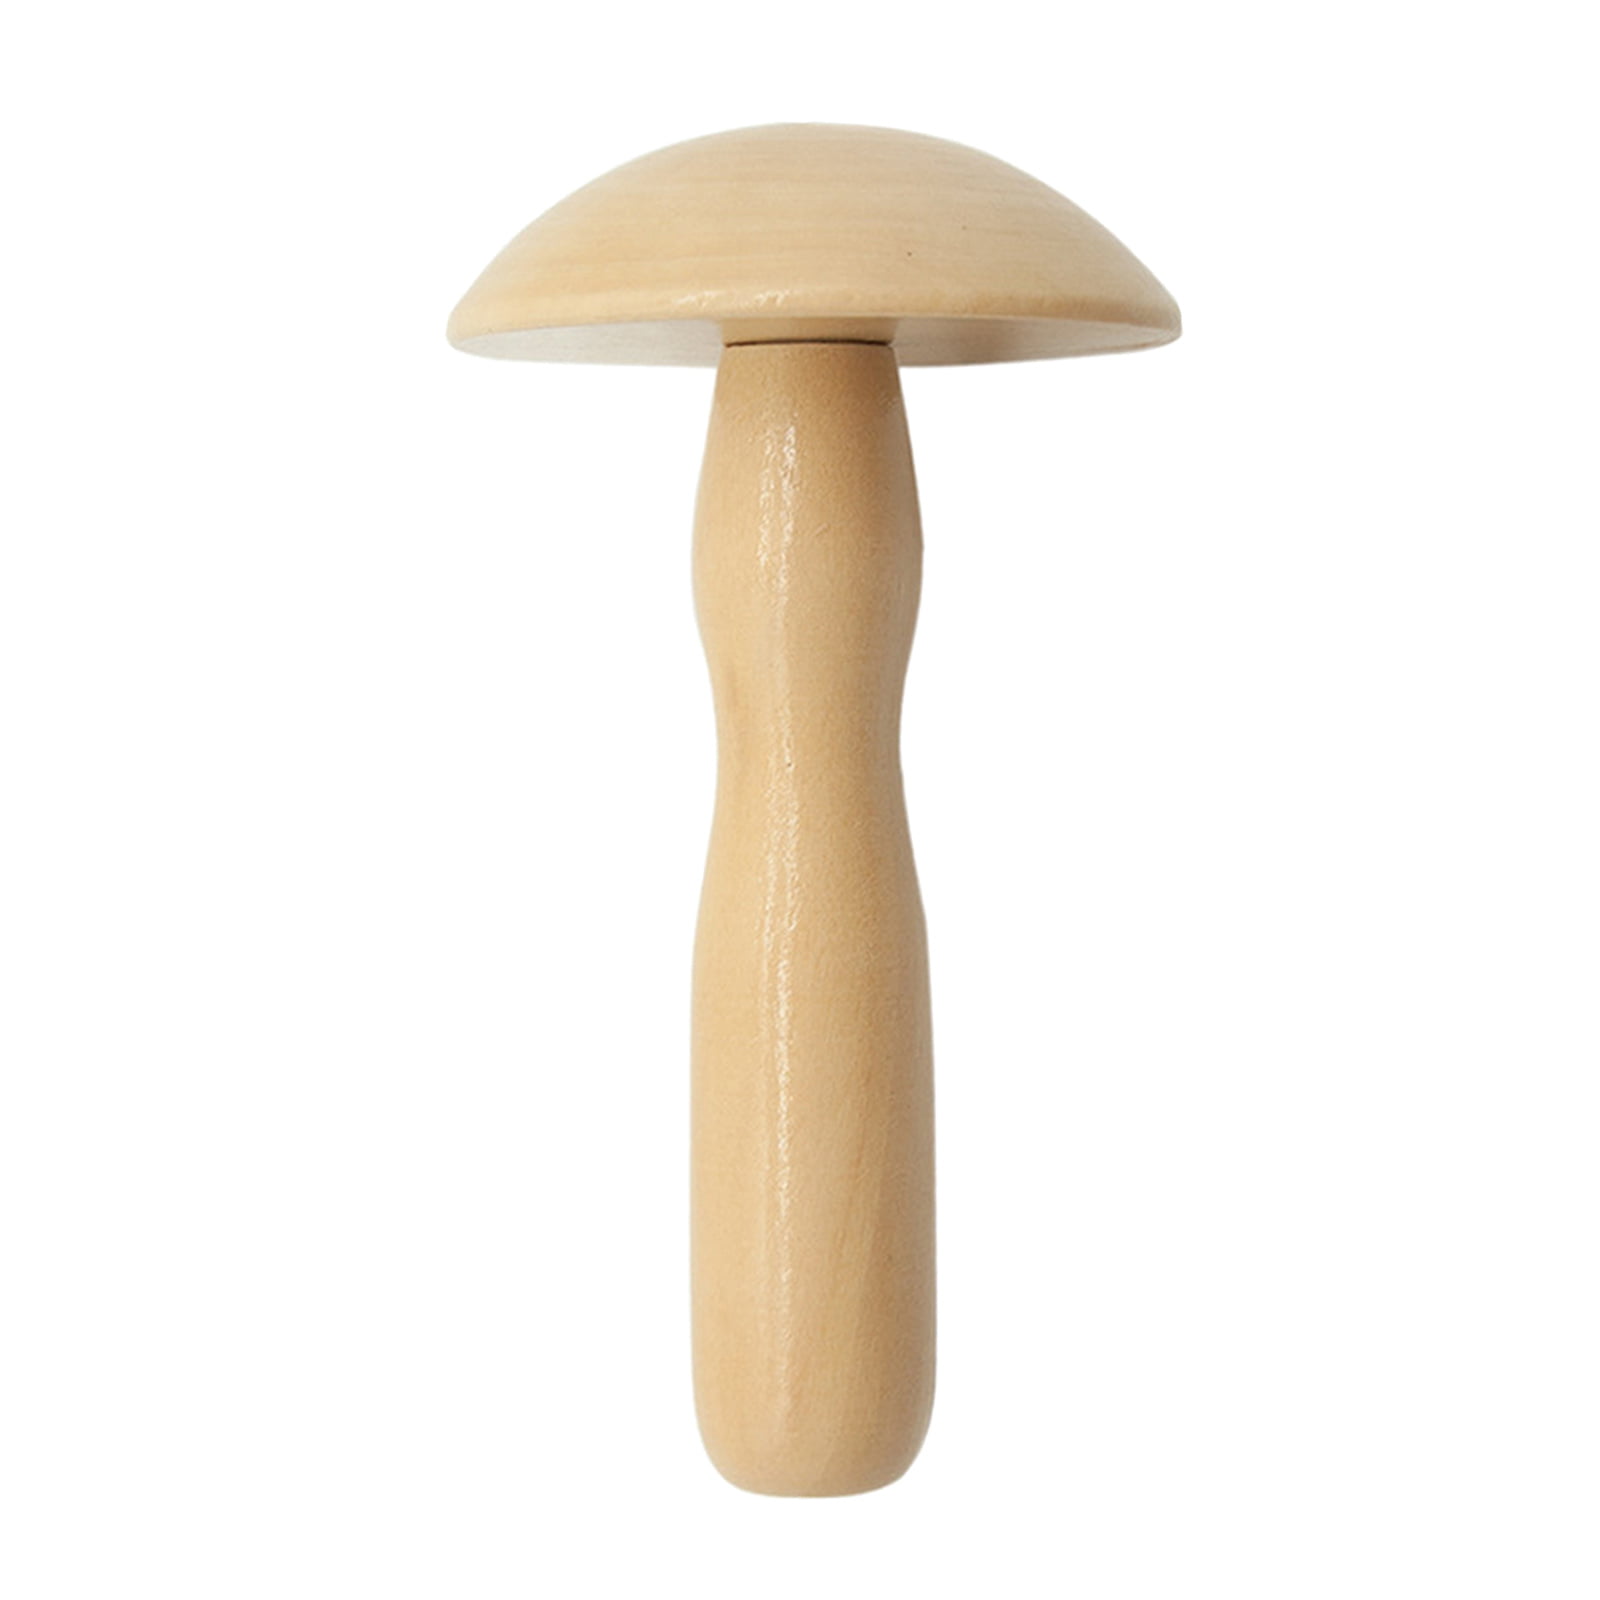 Wooden Mending Darning Mushroom DIY Darning Patching Sewing Punch Pins Tool 